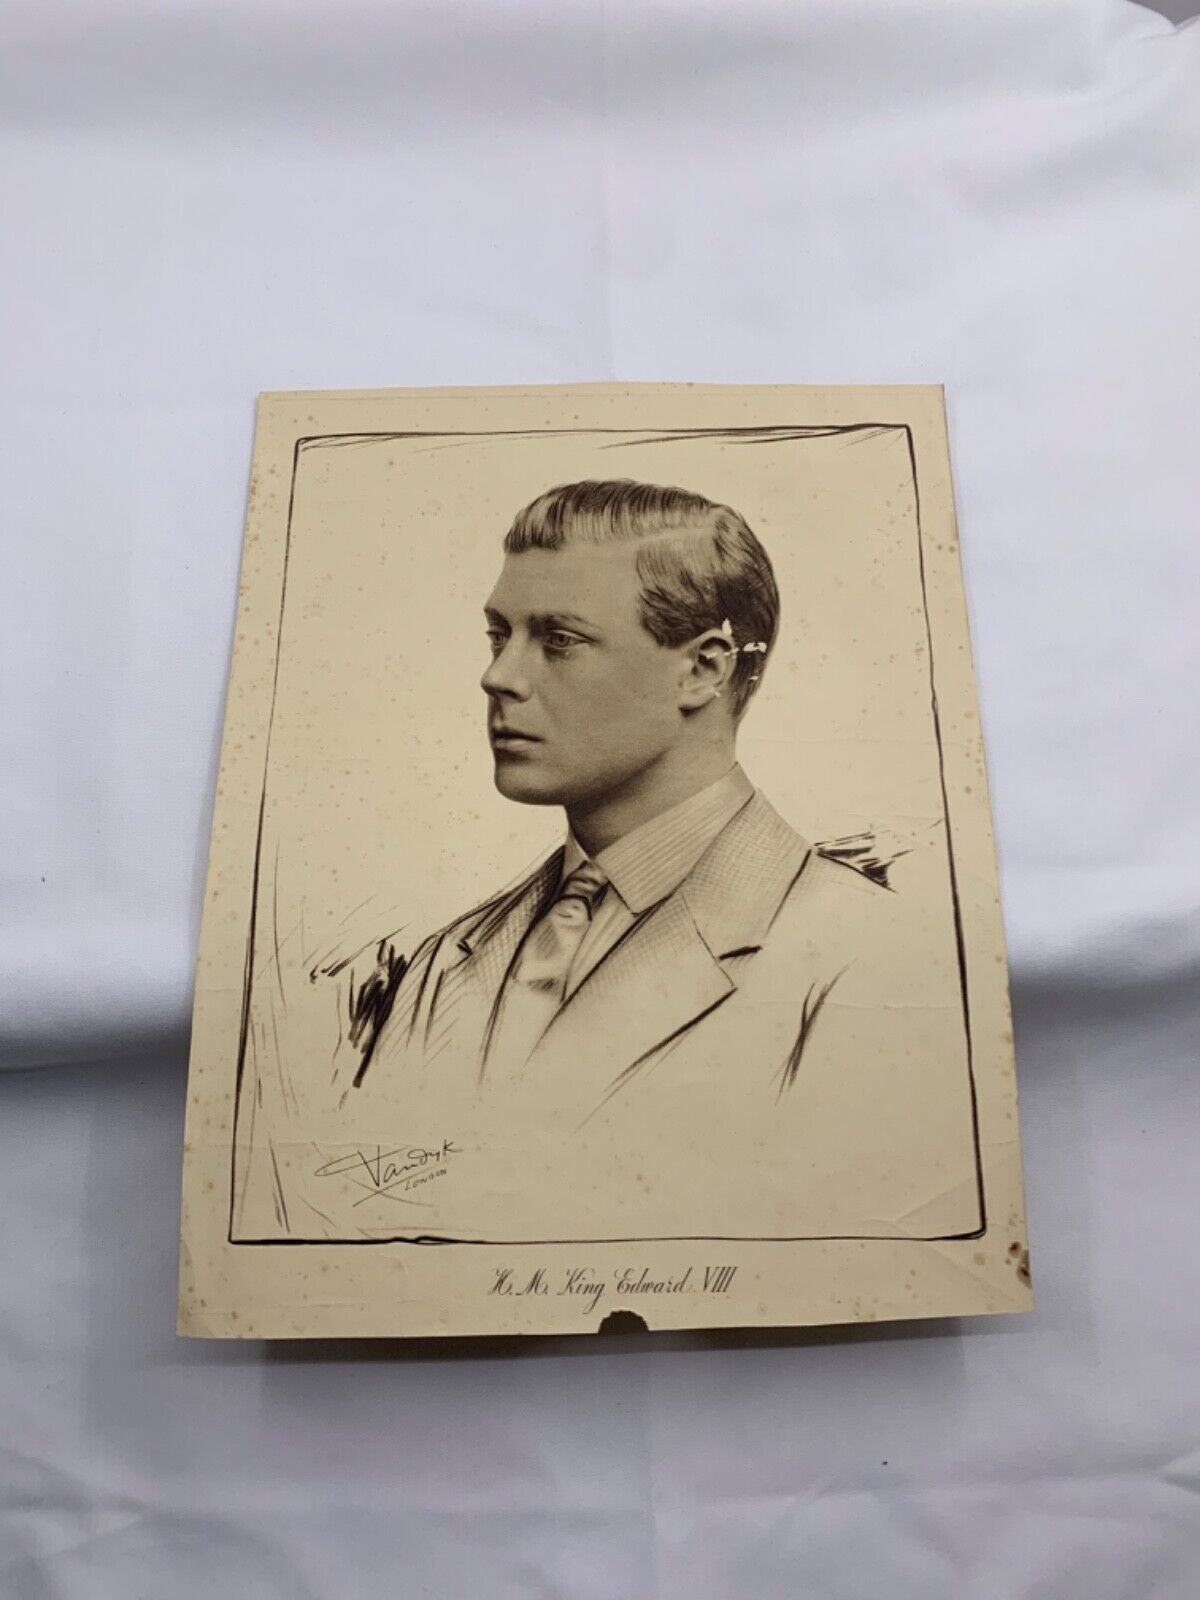 Original Carl Vandyk Signed Picture of HM King Edward VIII